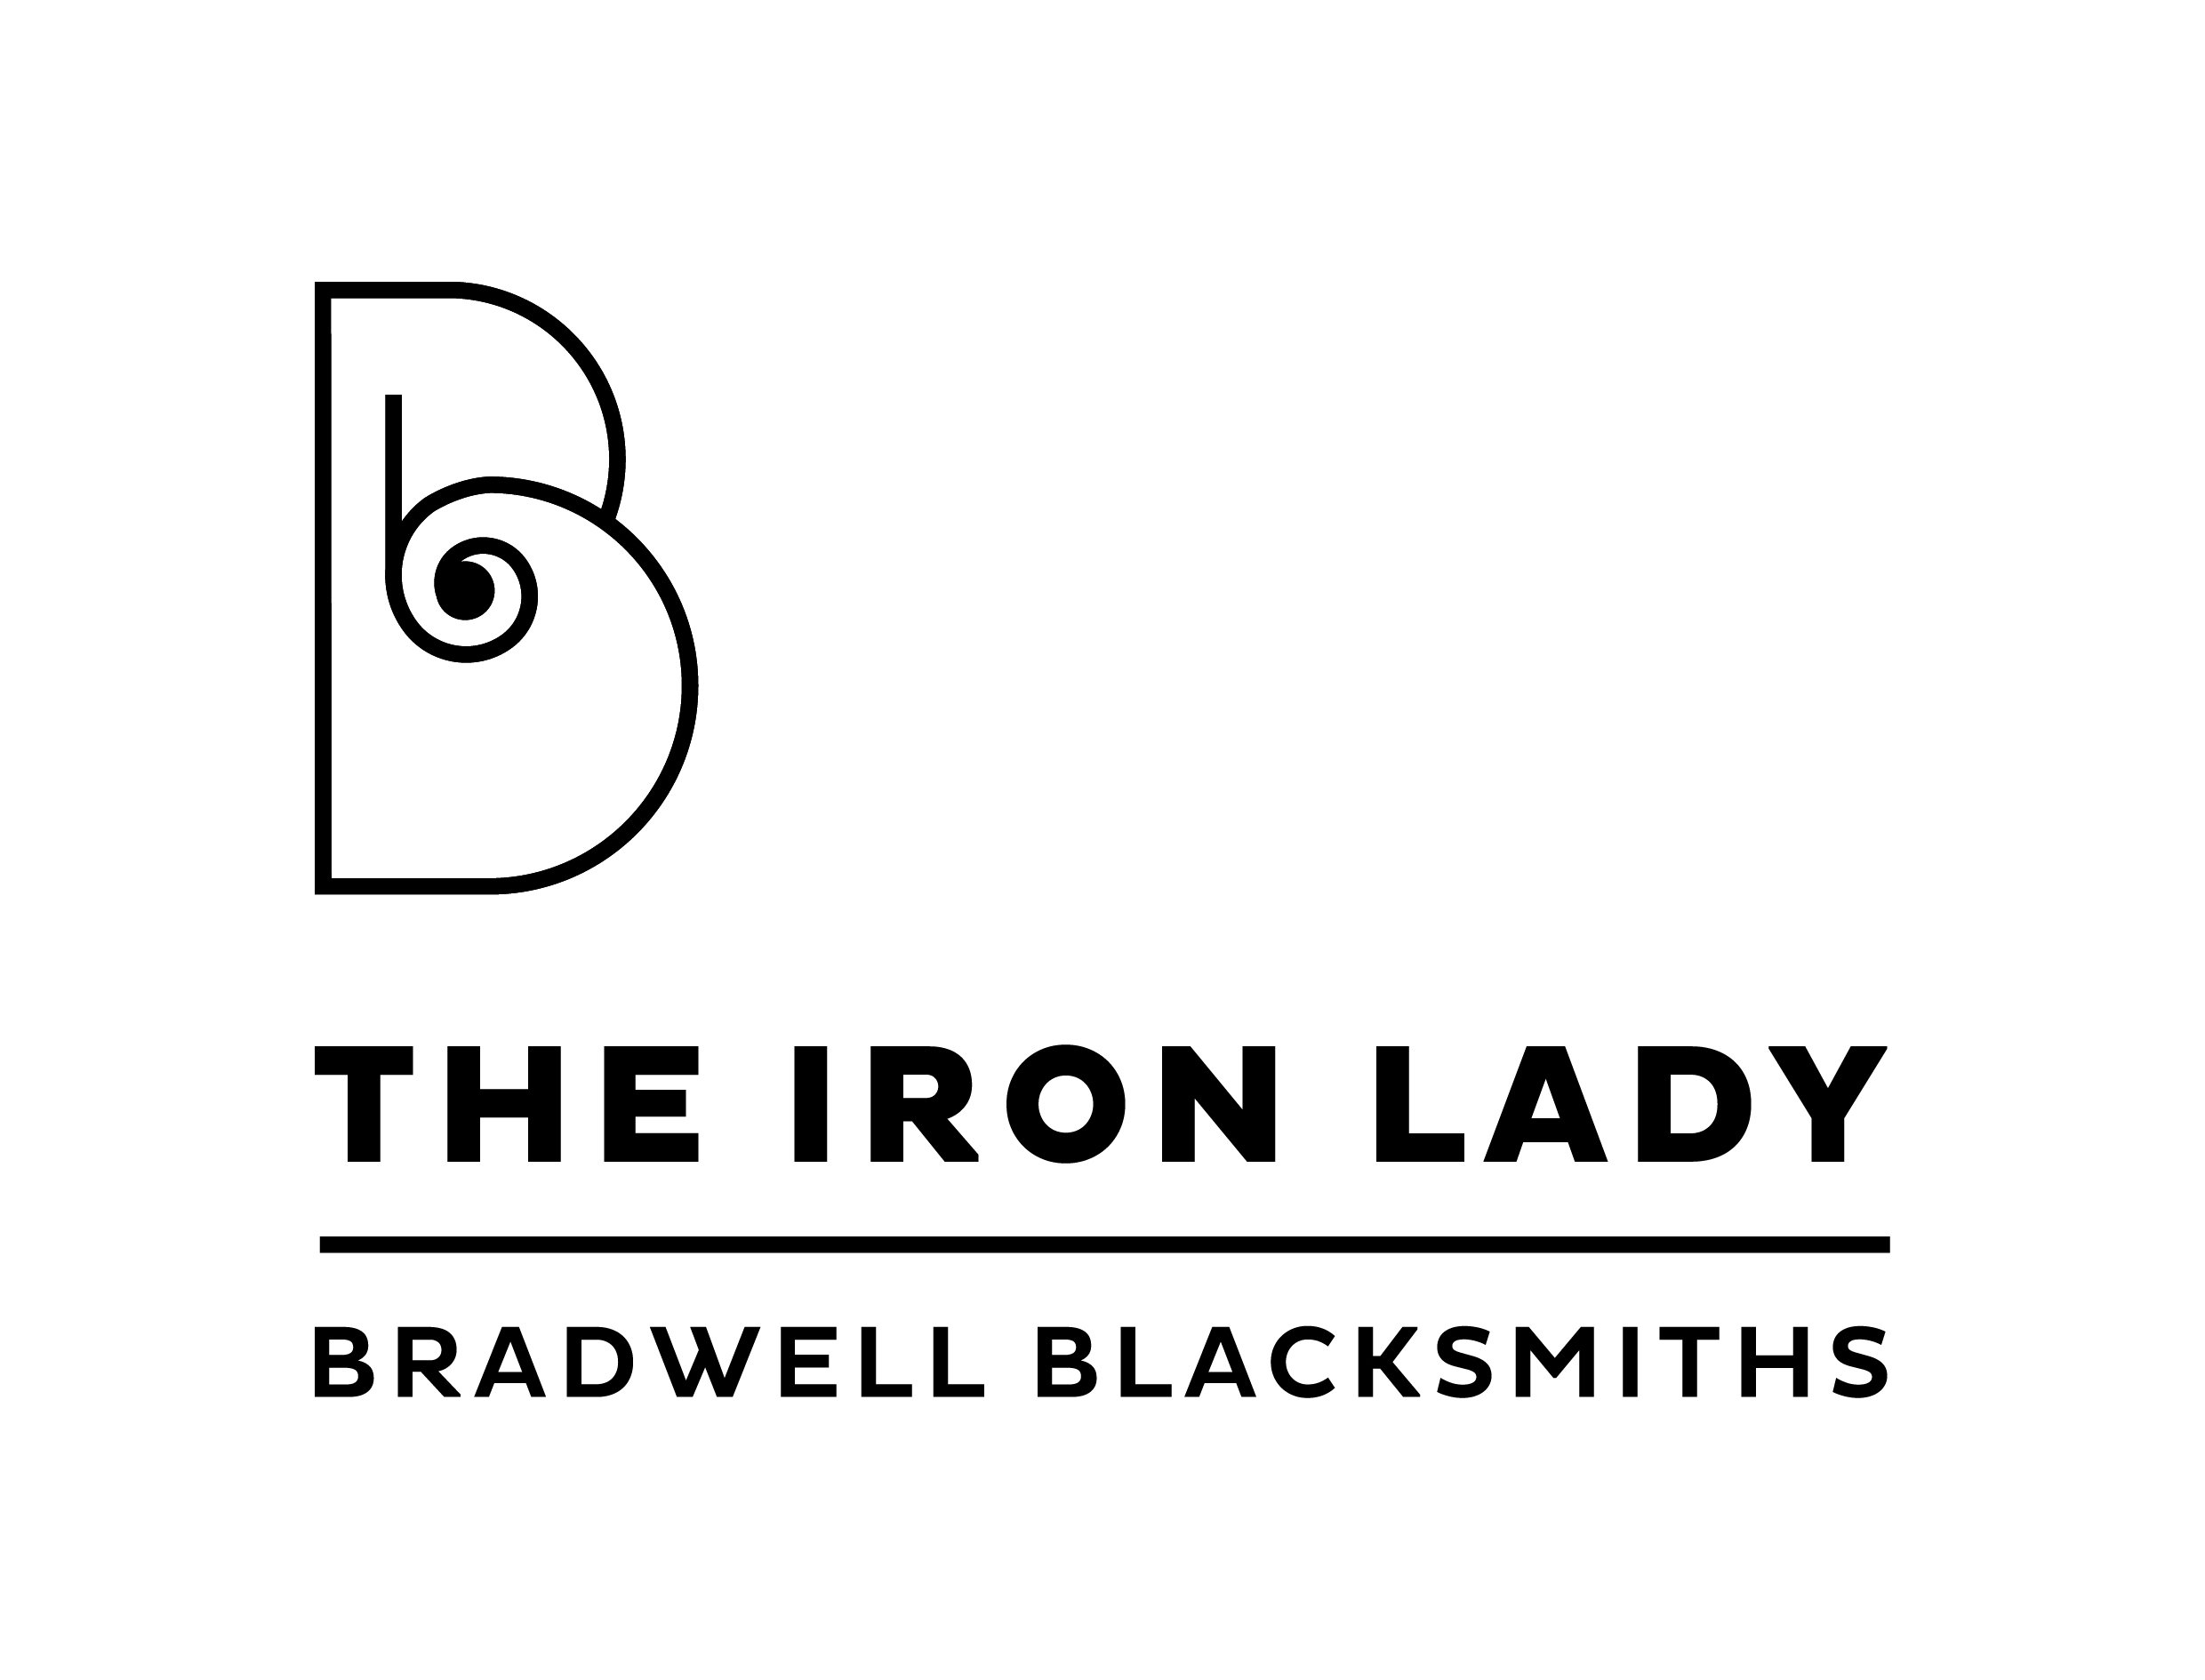 Bradwell Blacksmiths - The Iron Lady